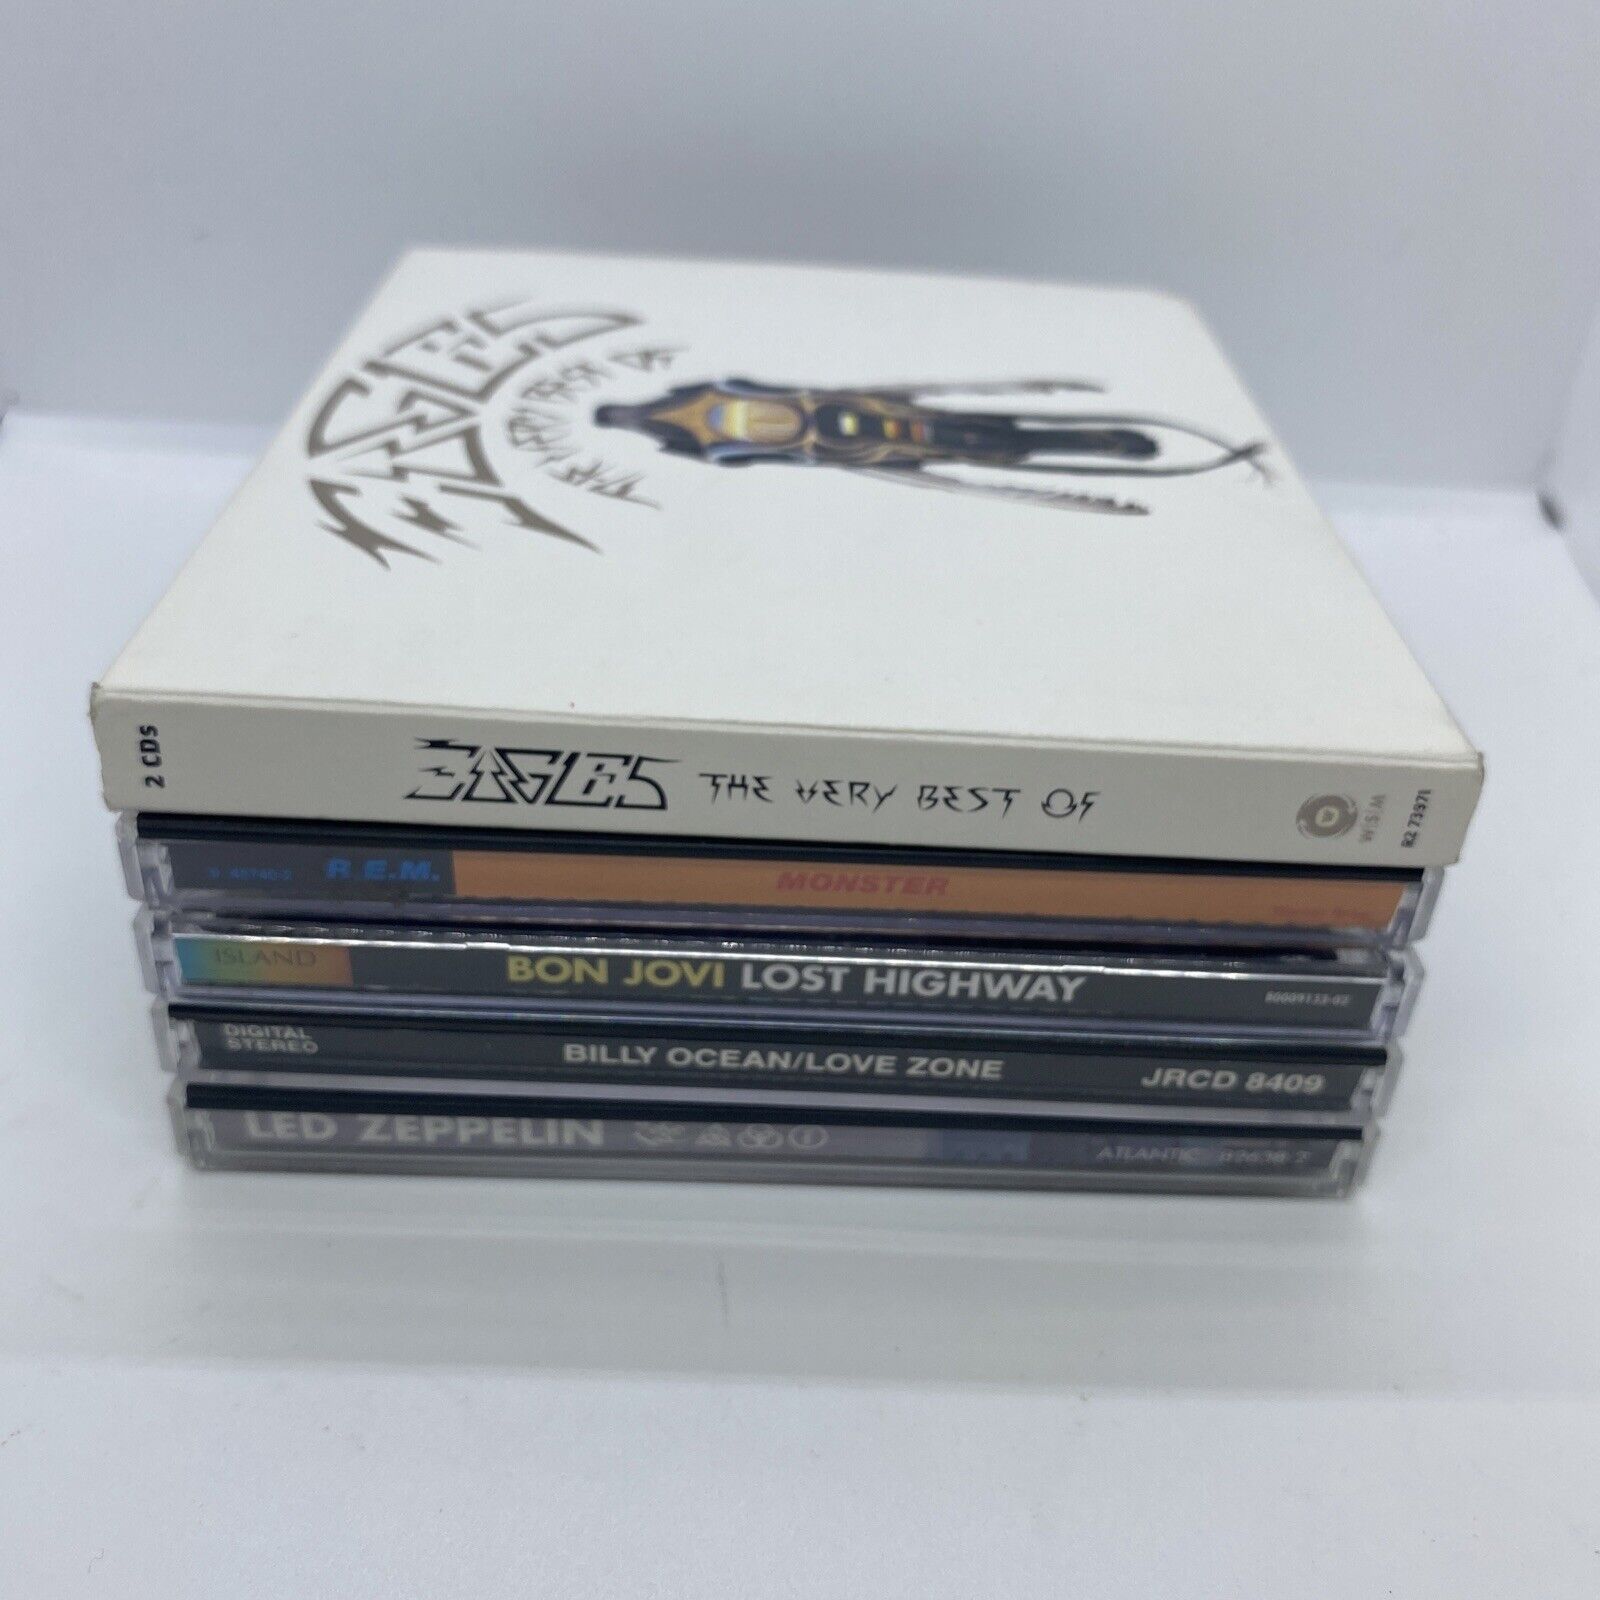 Lot of 5 - Music CD’s - Eagles, Led Zepplin, Bon Jovi, REM, Billy Ocean